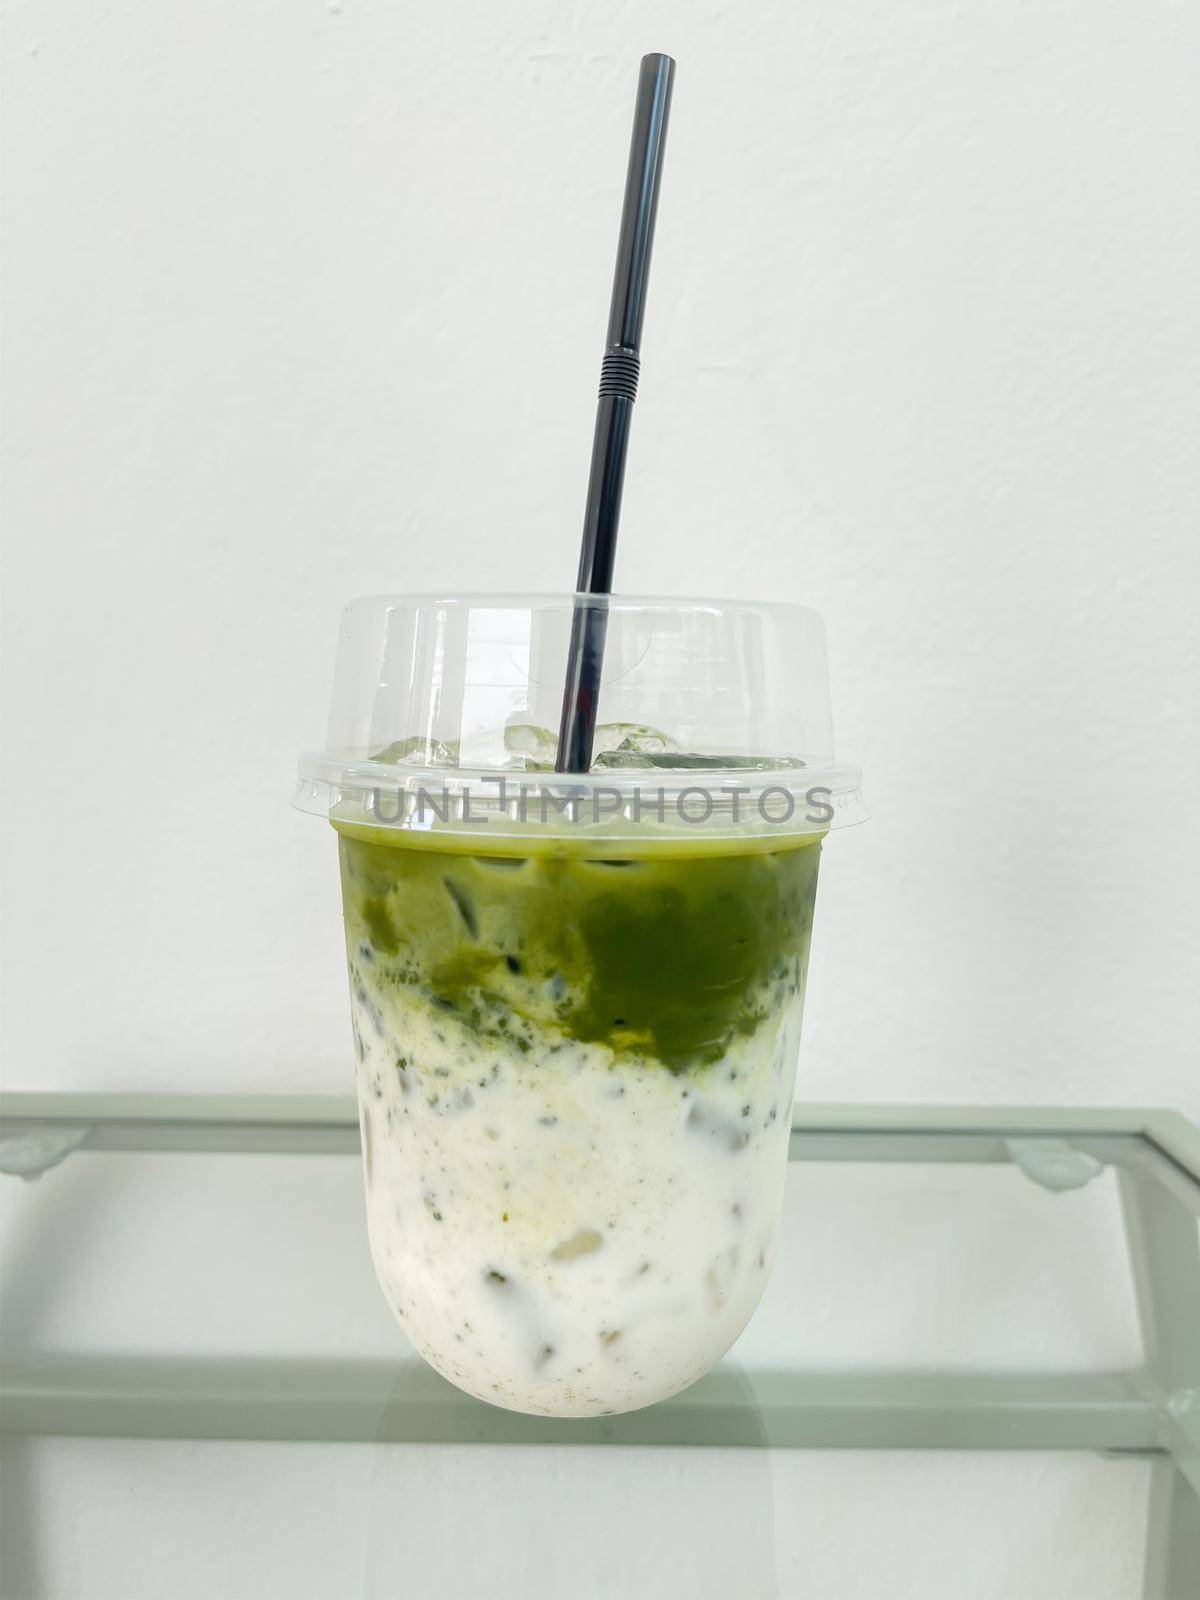 A glass of iced green tea by punsayaporn